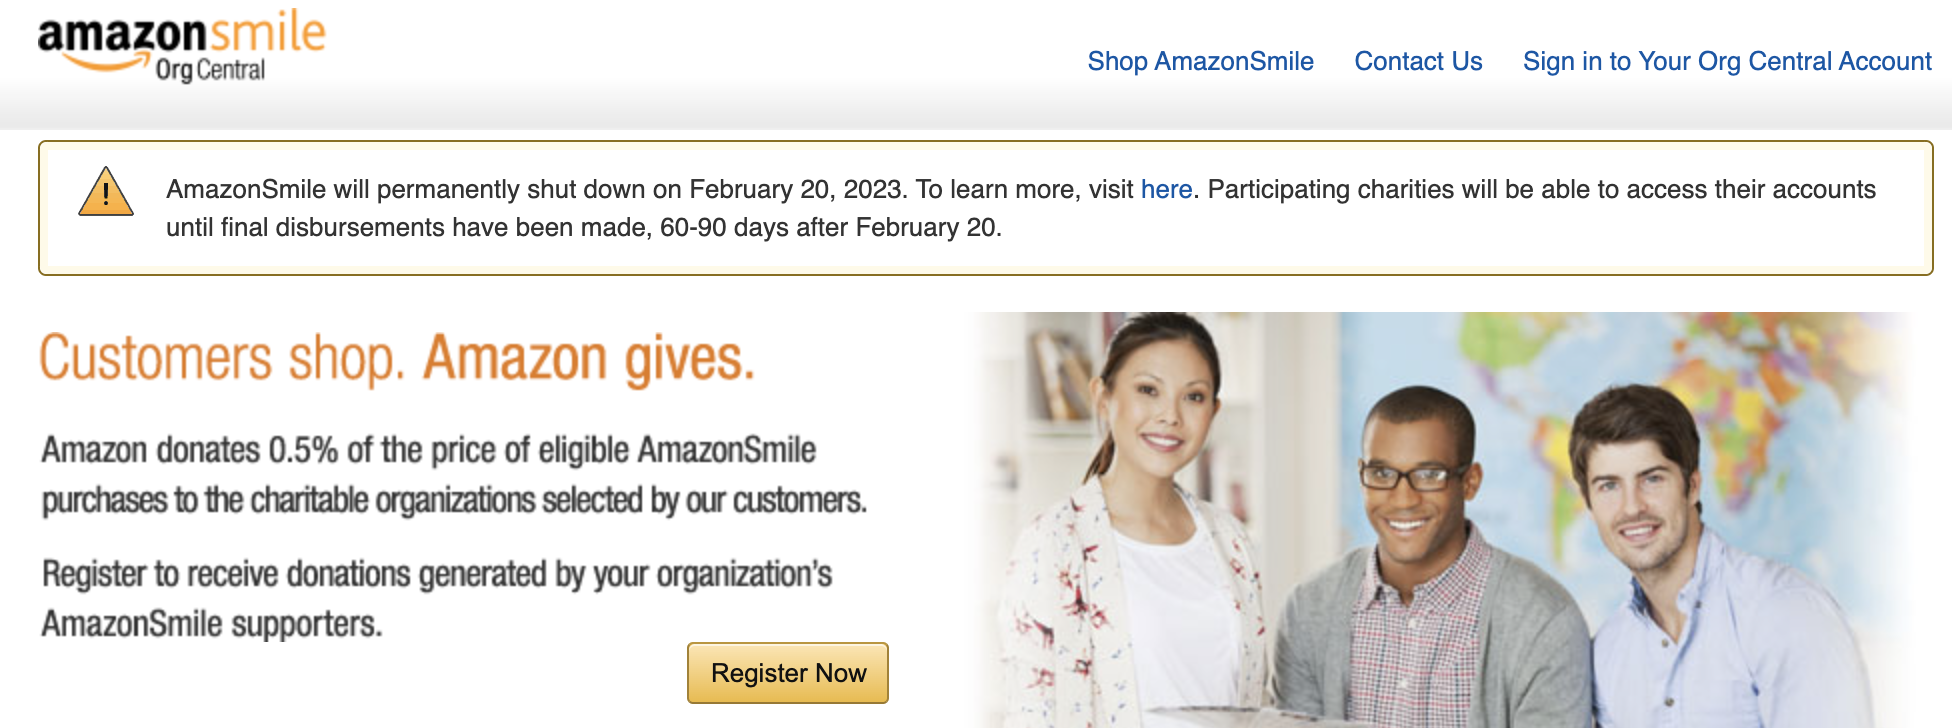 AmazonSmile charity program discontinued